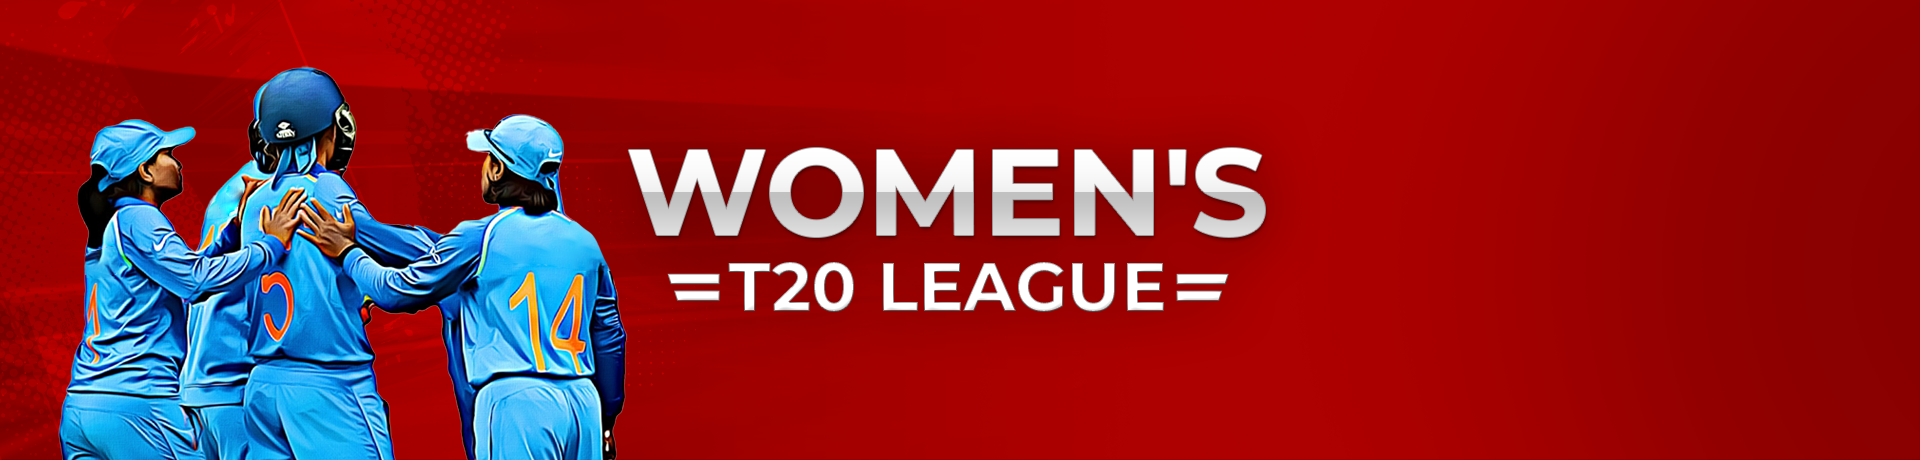 Womens-t20-league